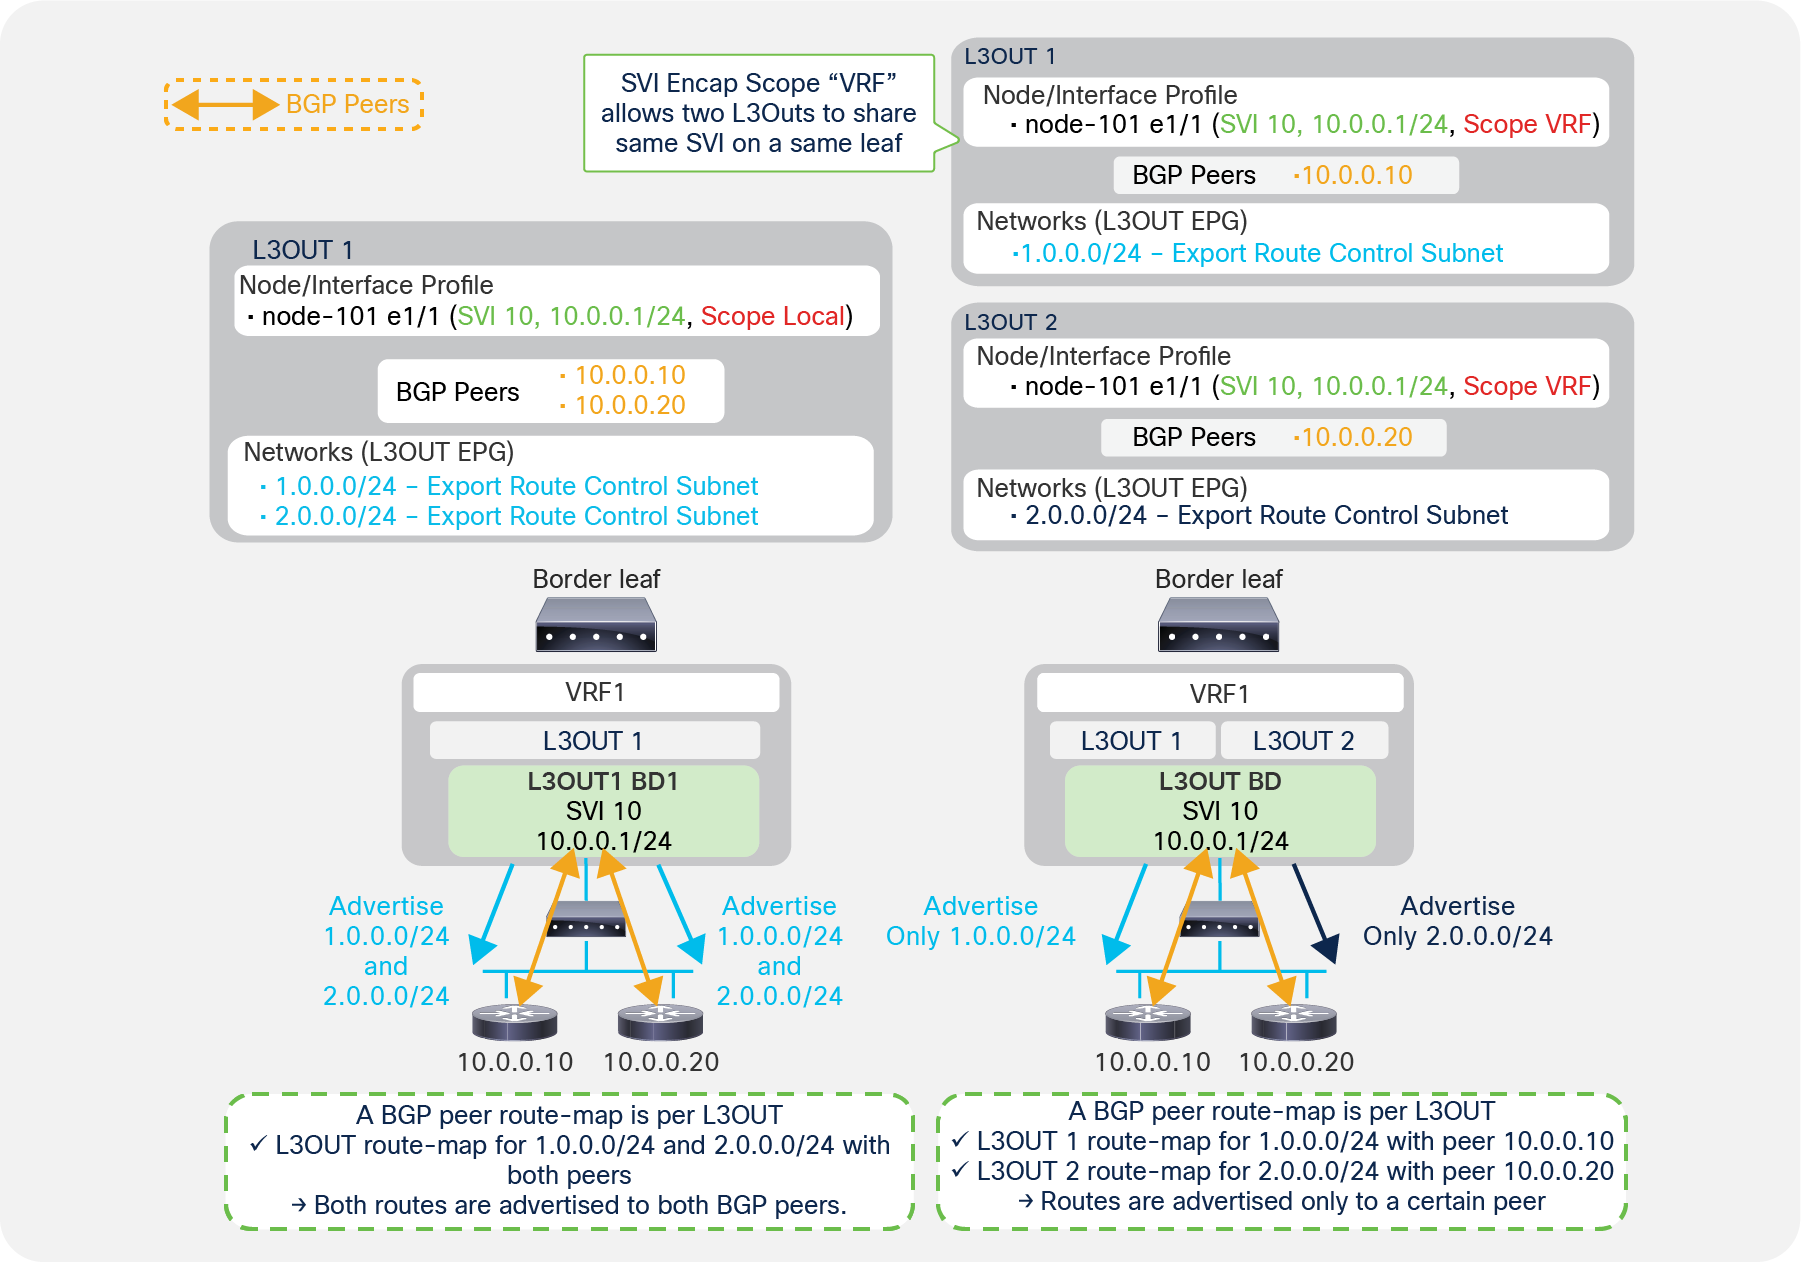 Regular BGP route control (left) and granular BGP route control with SVI Encap Scope VRF (right)